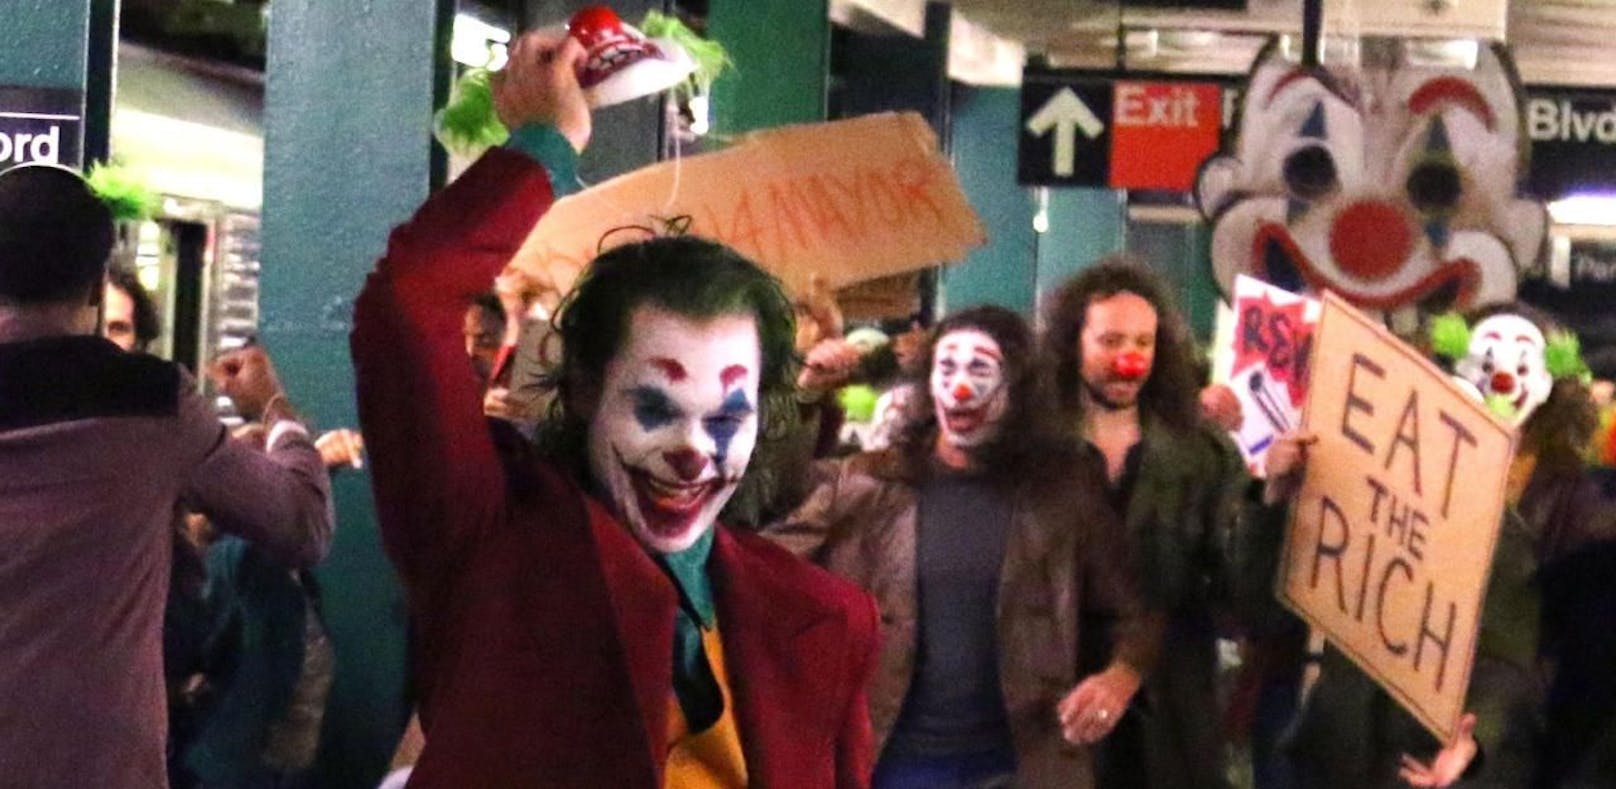 Statisten am "Joker"-Set mussten in U-Bahn pinkeln